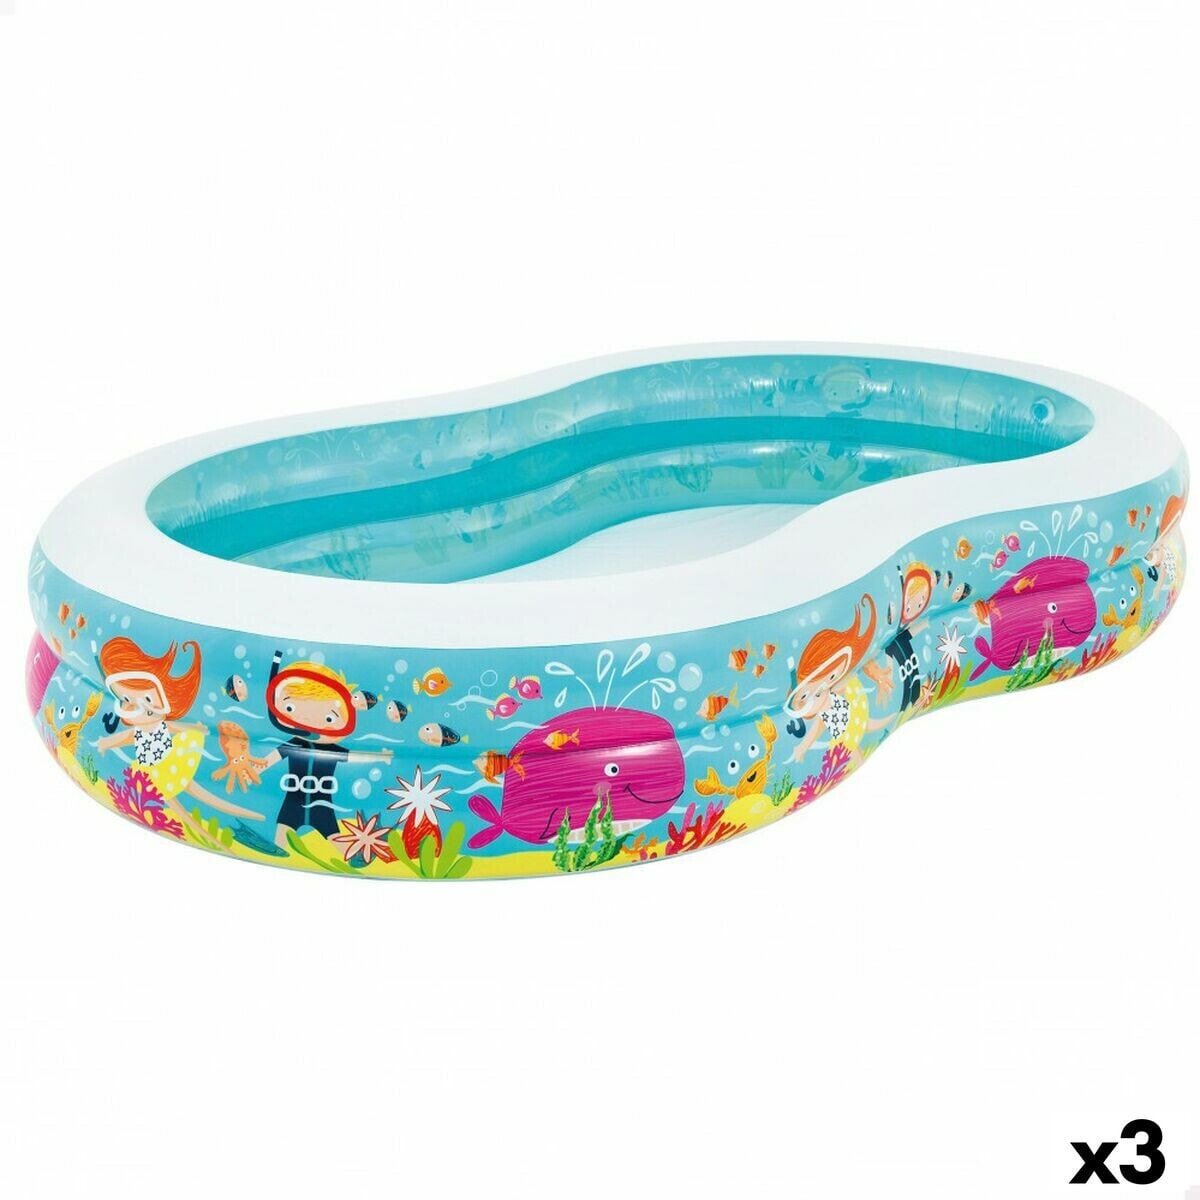 Inflatable pool Intex Paradise 700 L 262 x 46 x 160 cm (3 Units)